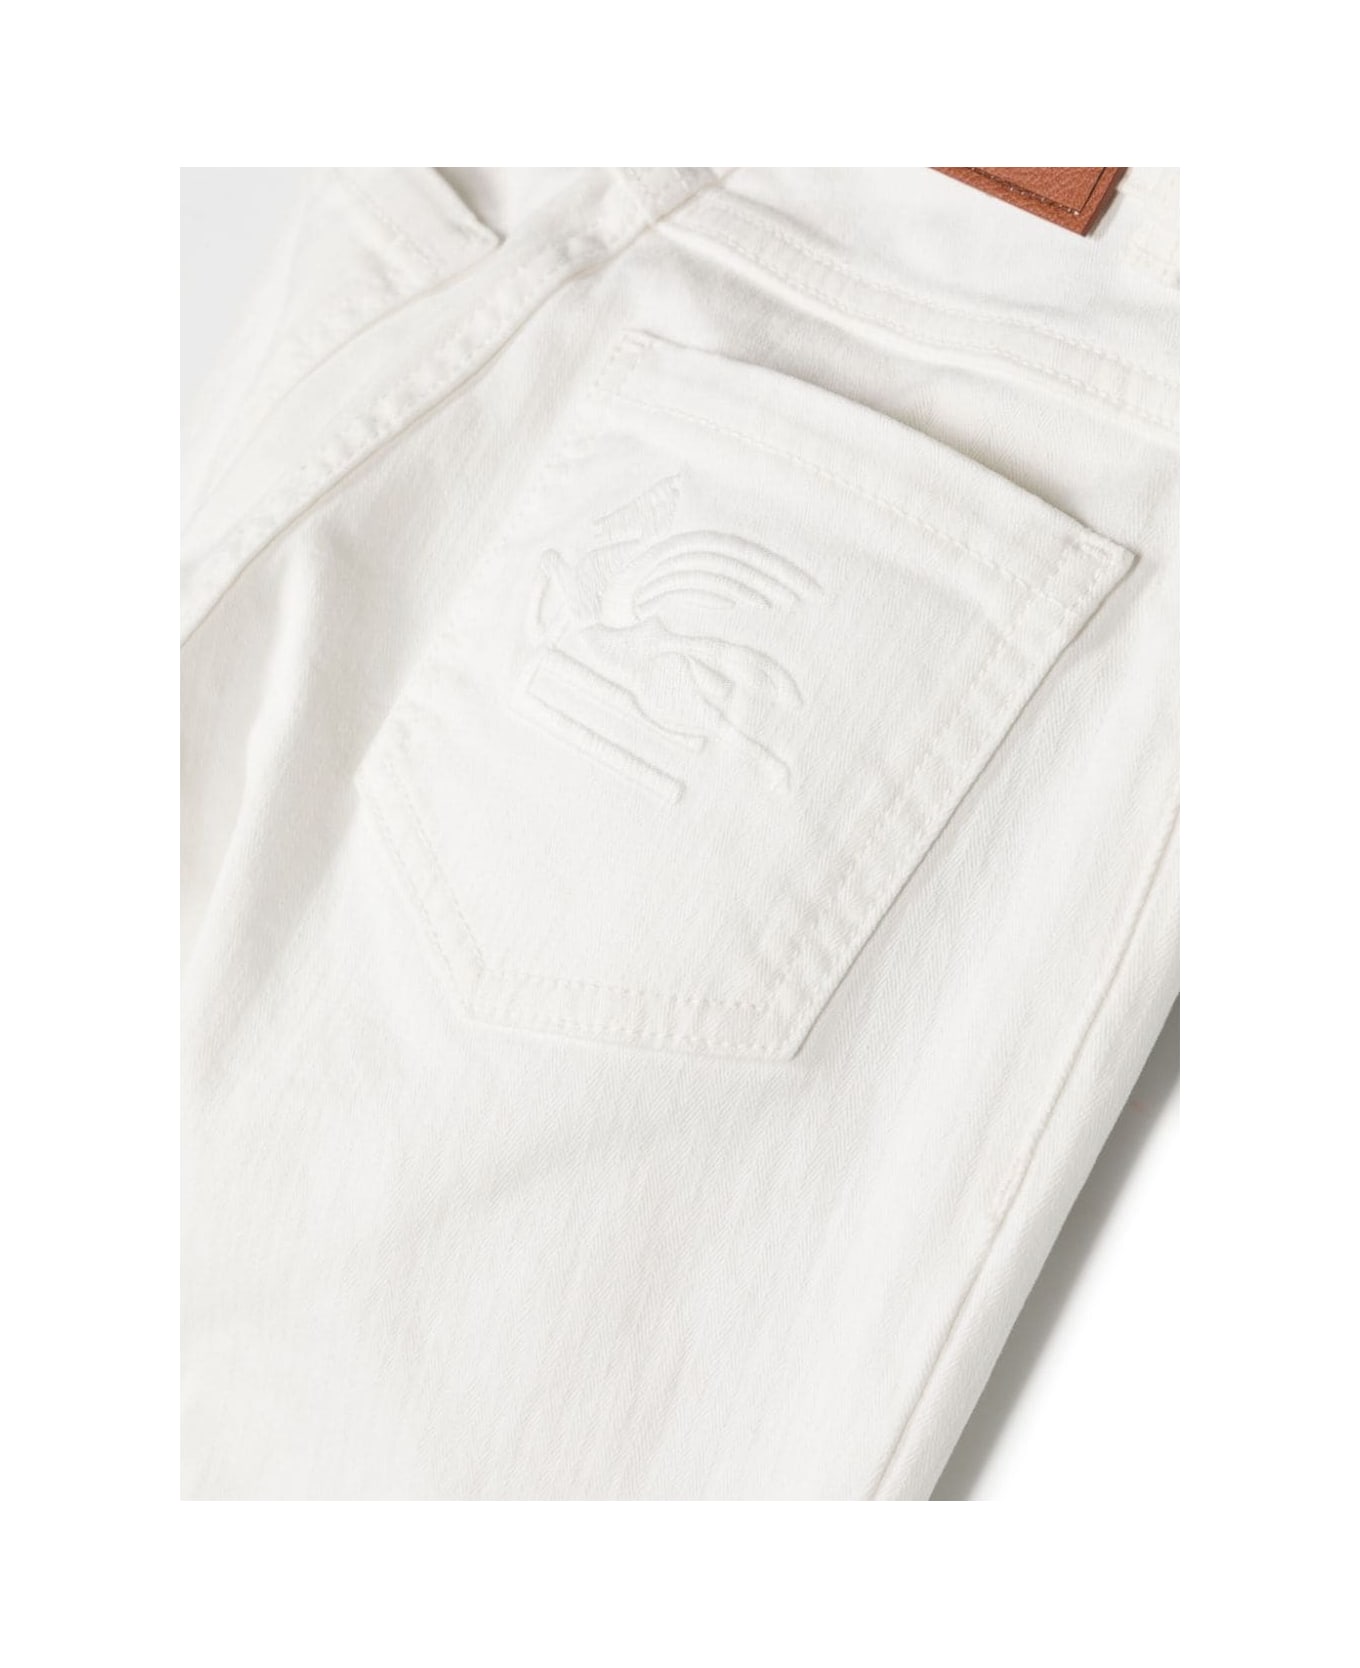 Etro White Slim Fit Jeans With Logo - White